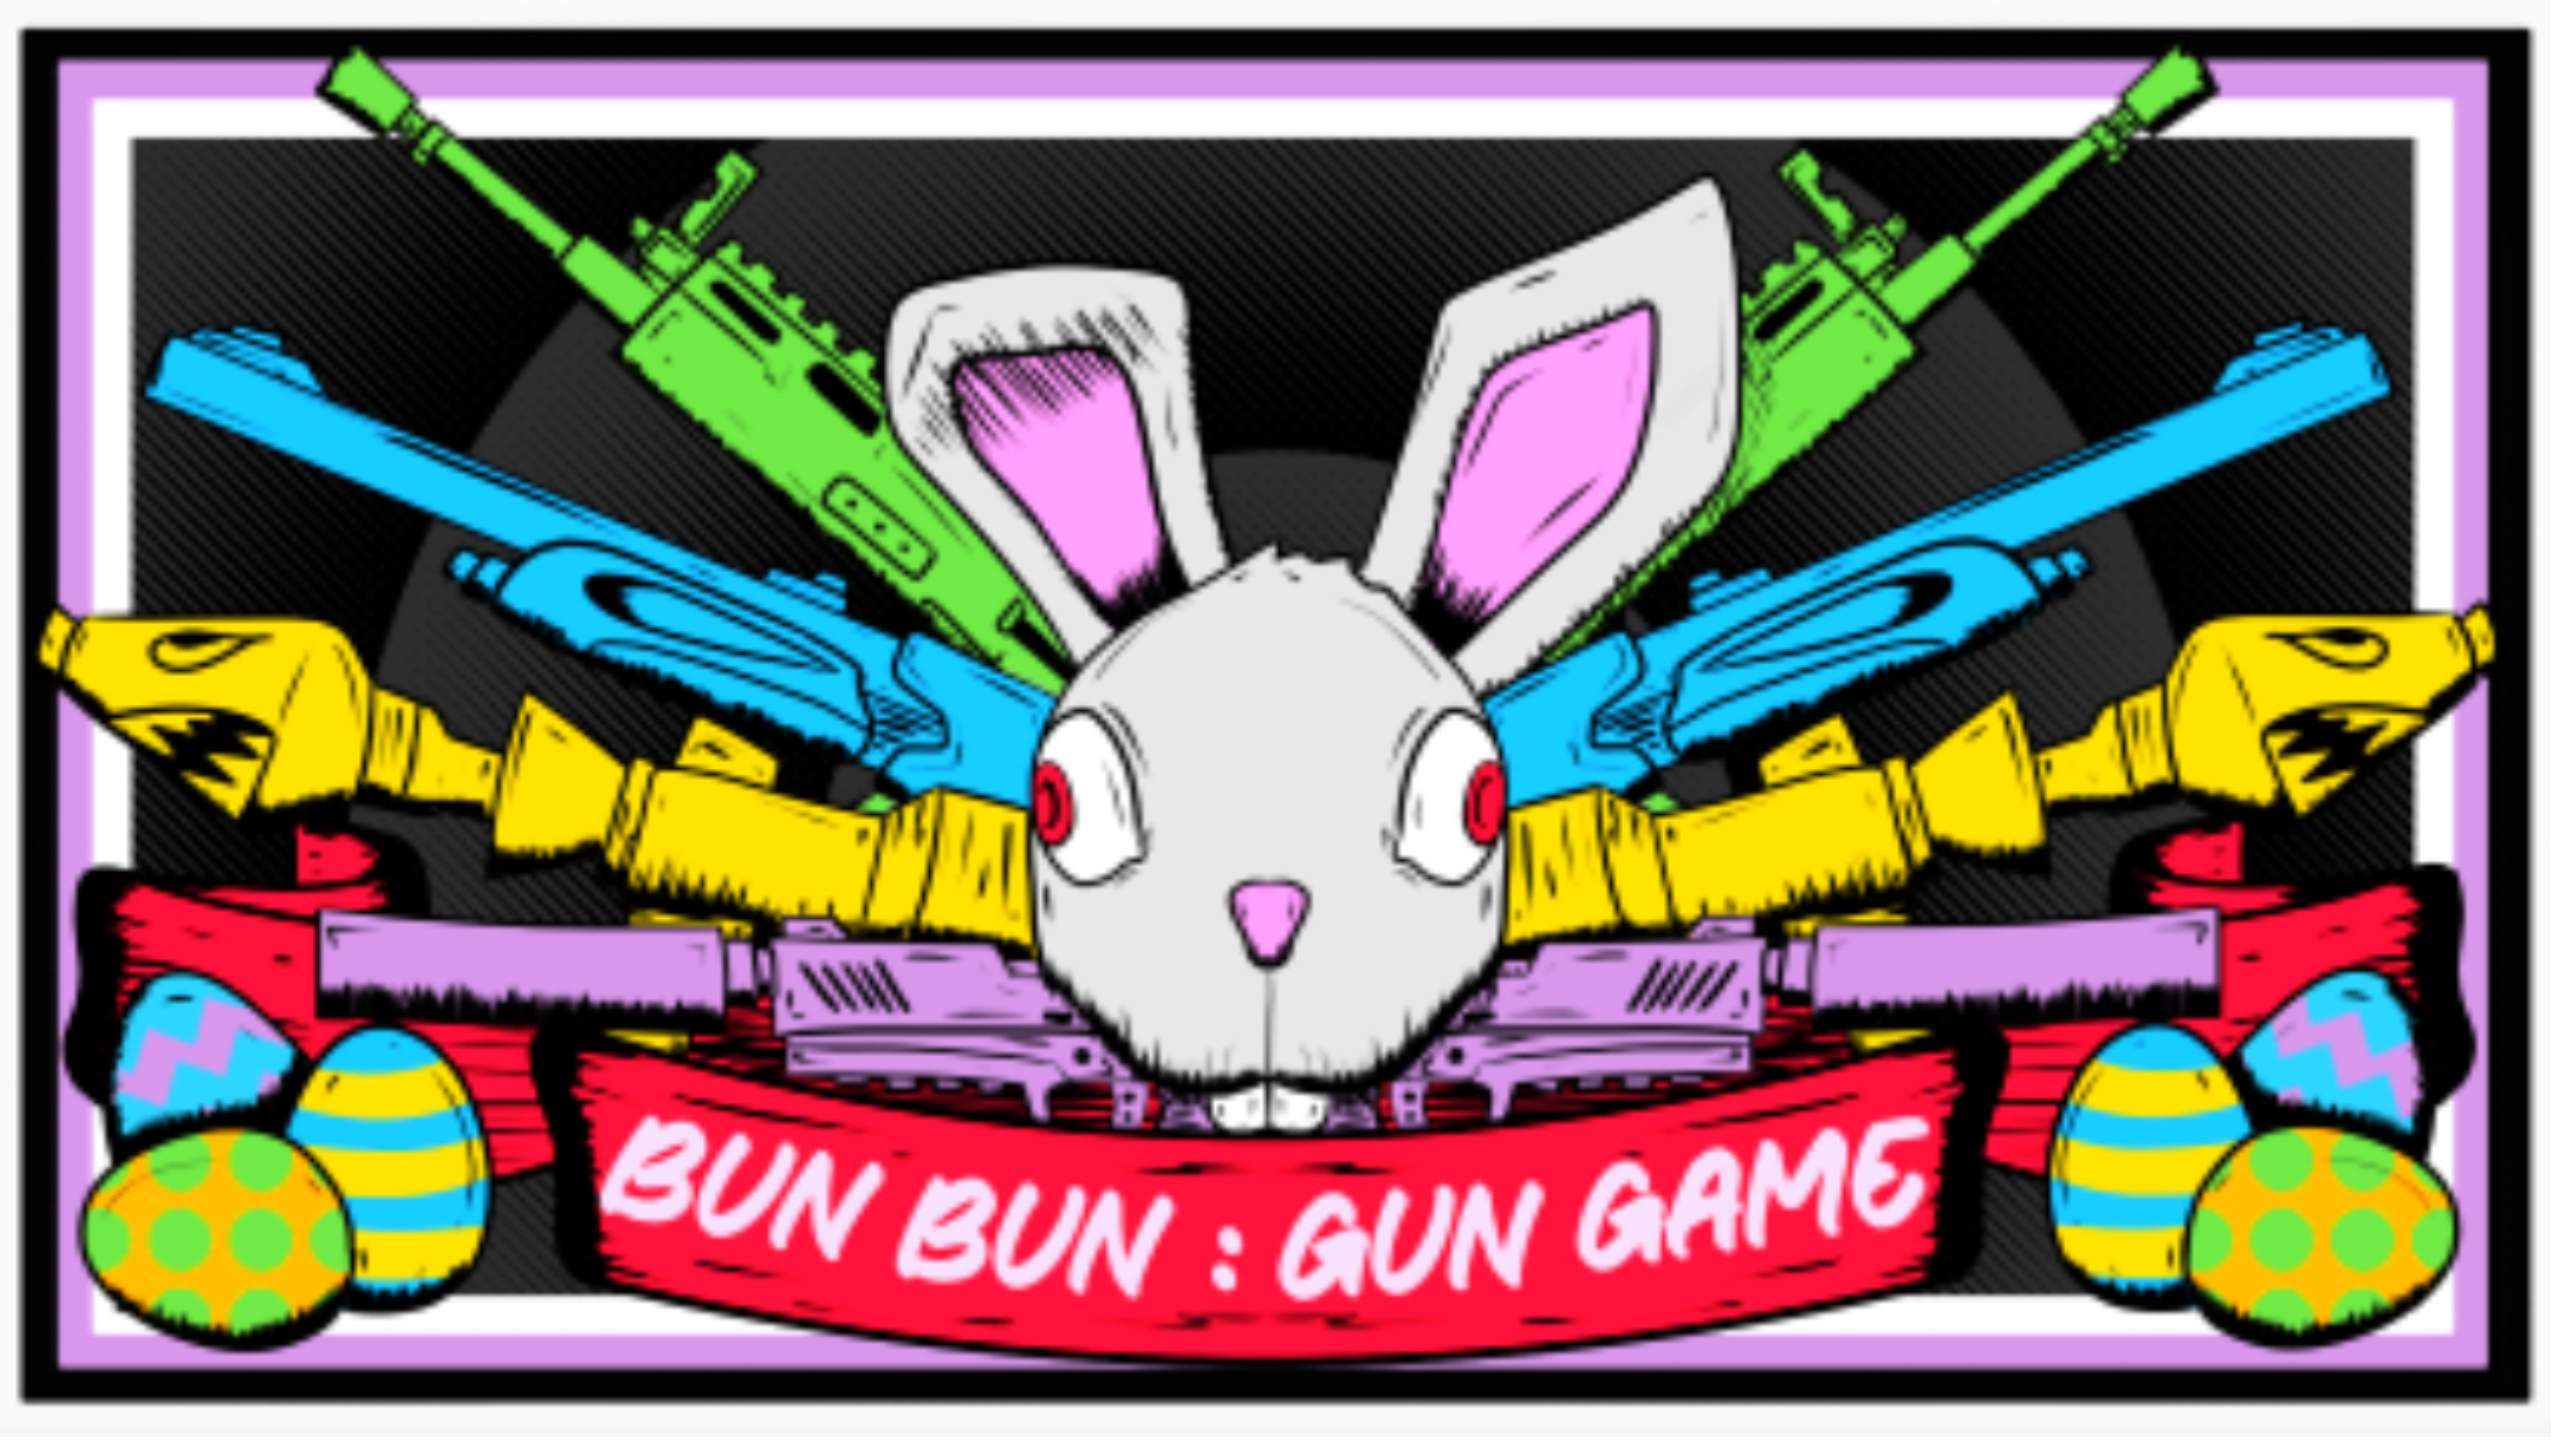 BUN BUN: GUN GAME image 2